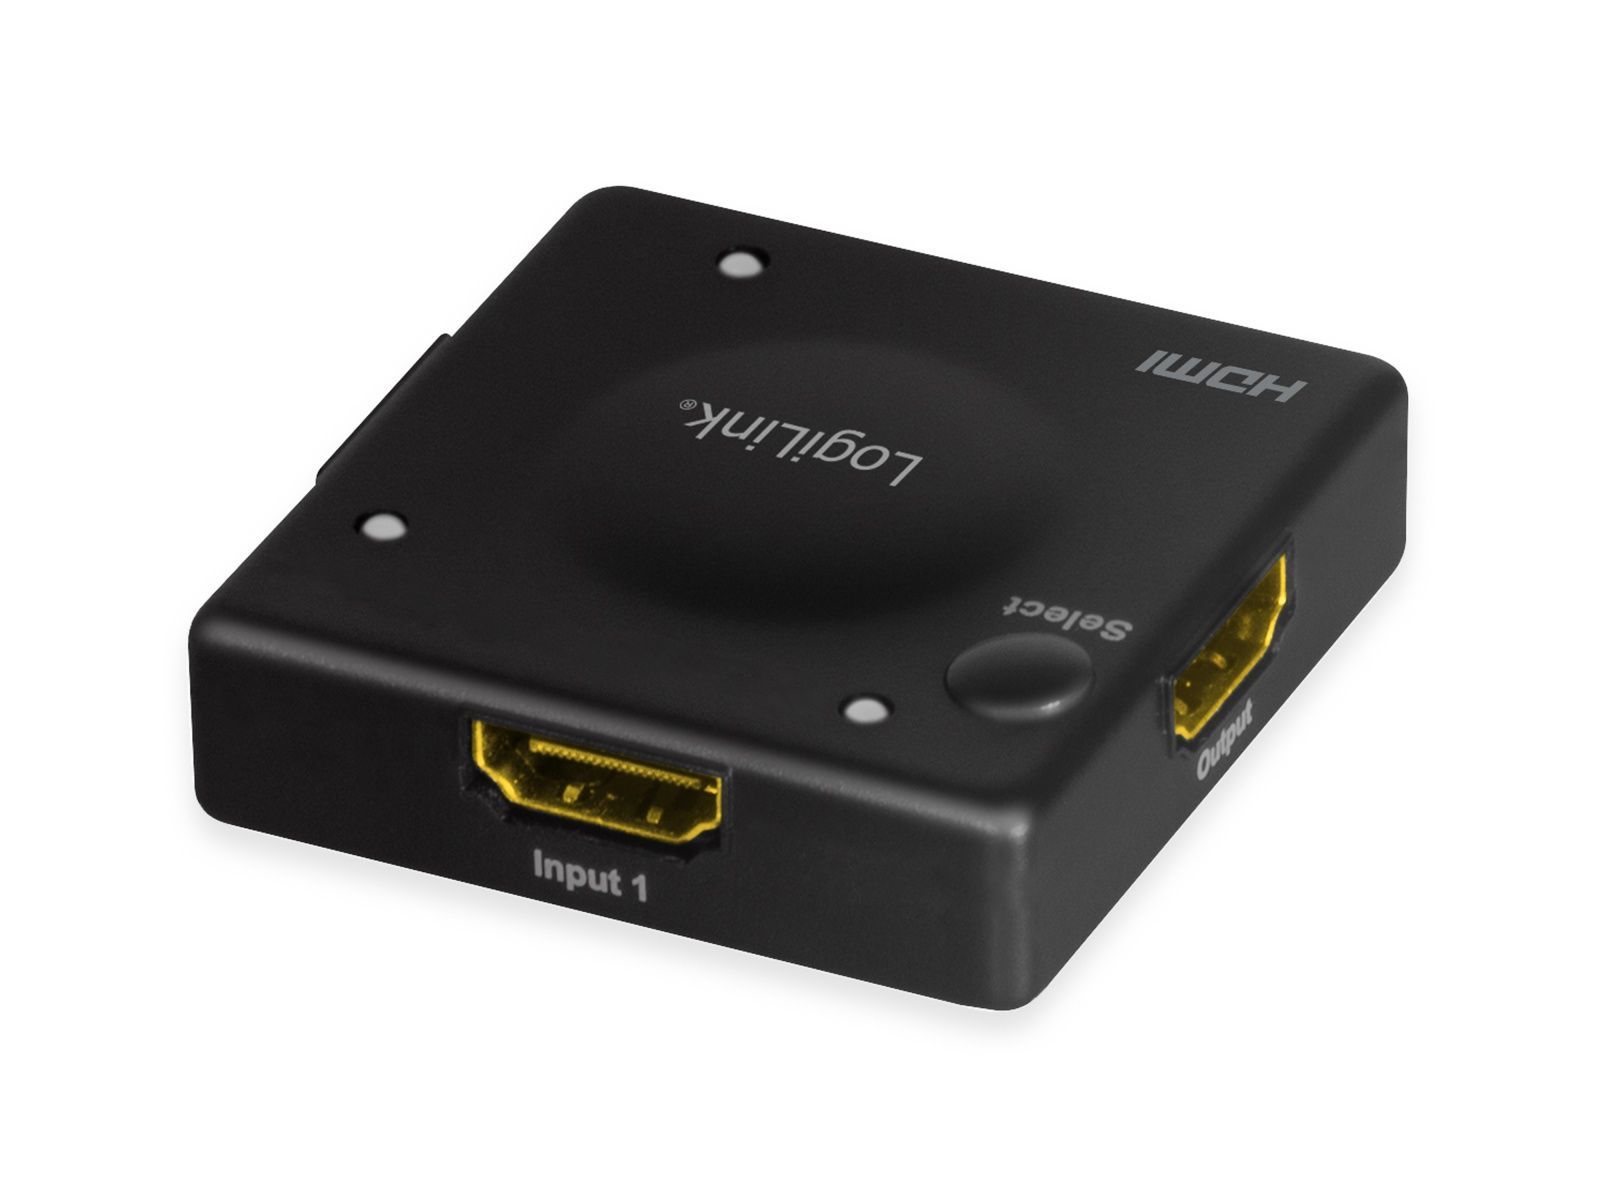 HDMI-Switch Mini 3x1-Port, HD0041, HDMI-Switch cm LOGILINK 1080p/60 Hz, 11,7